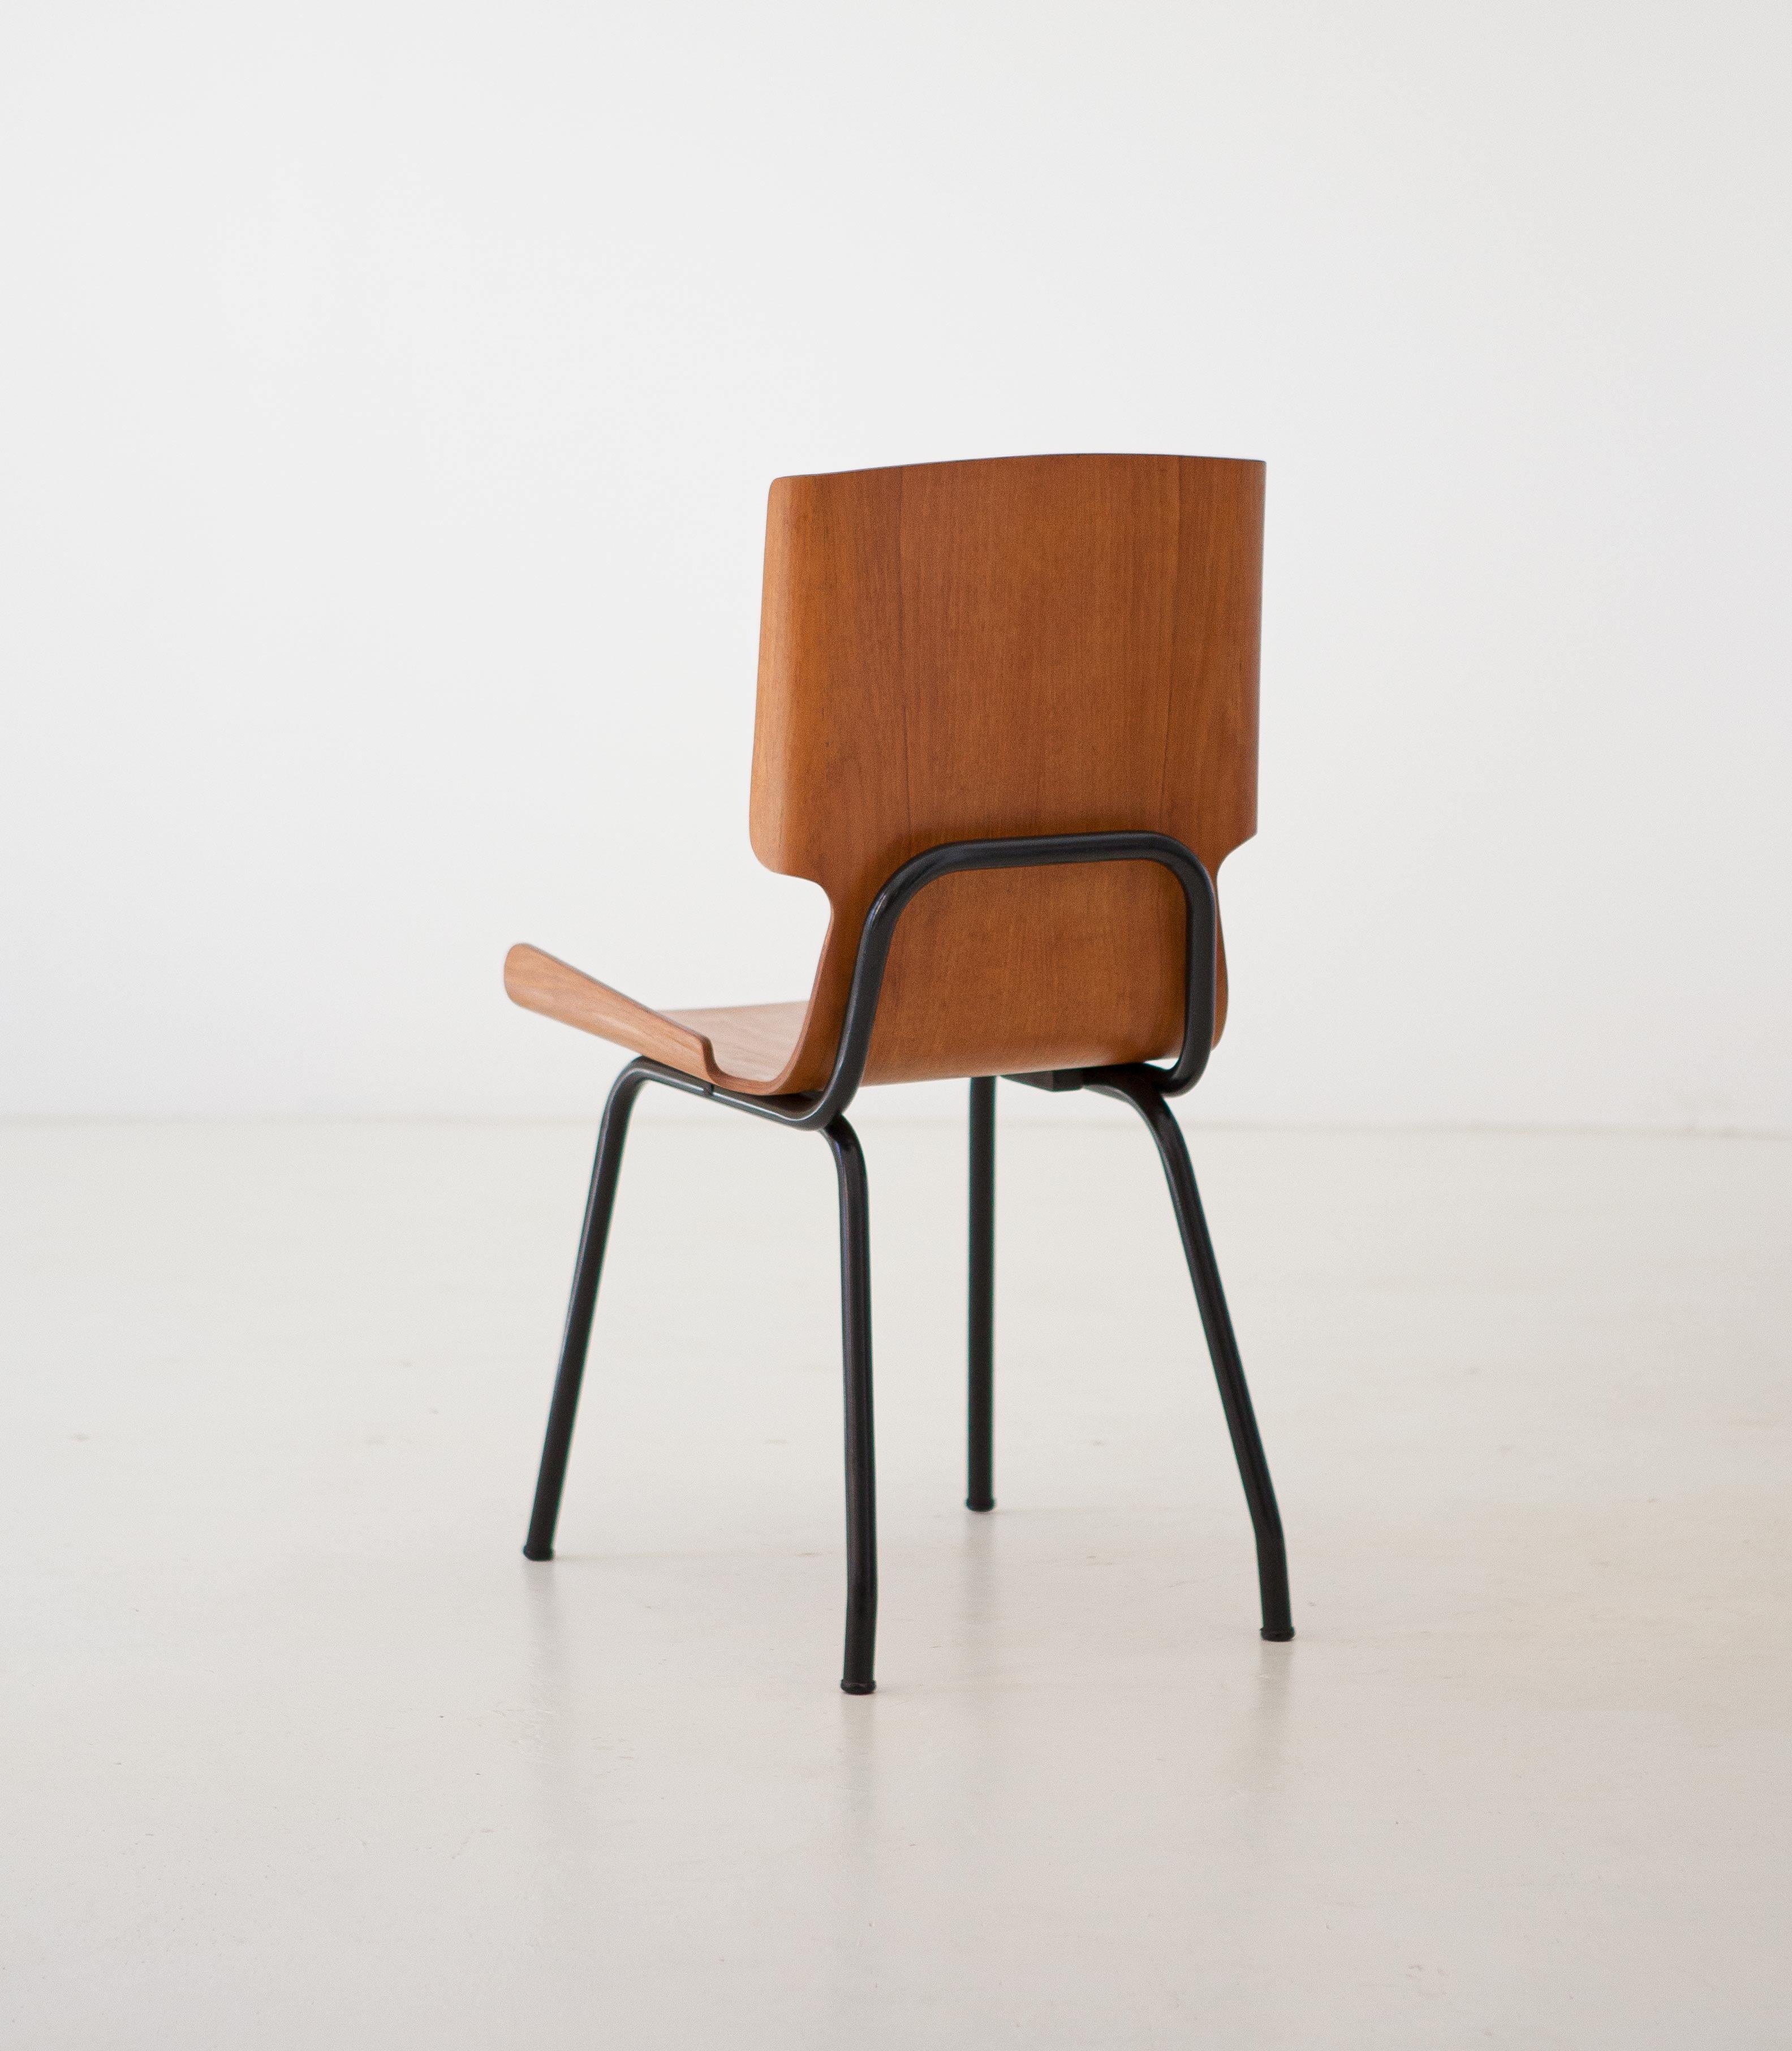 1950s Italian Curved Teak Chairs by SCC Societa’ Compensati Curvi, Set of Six For Sale 1